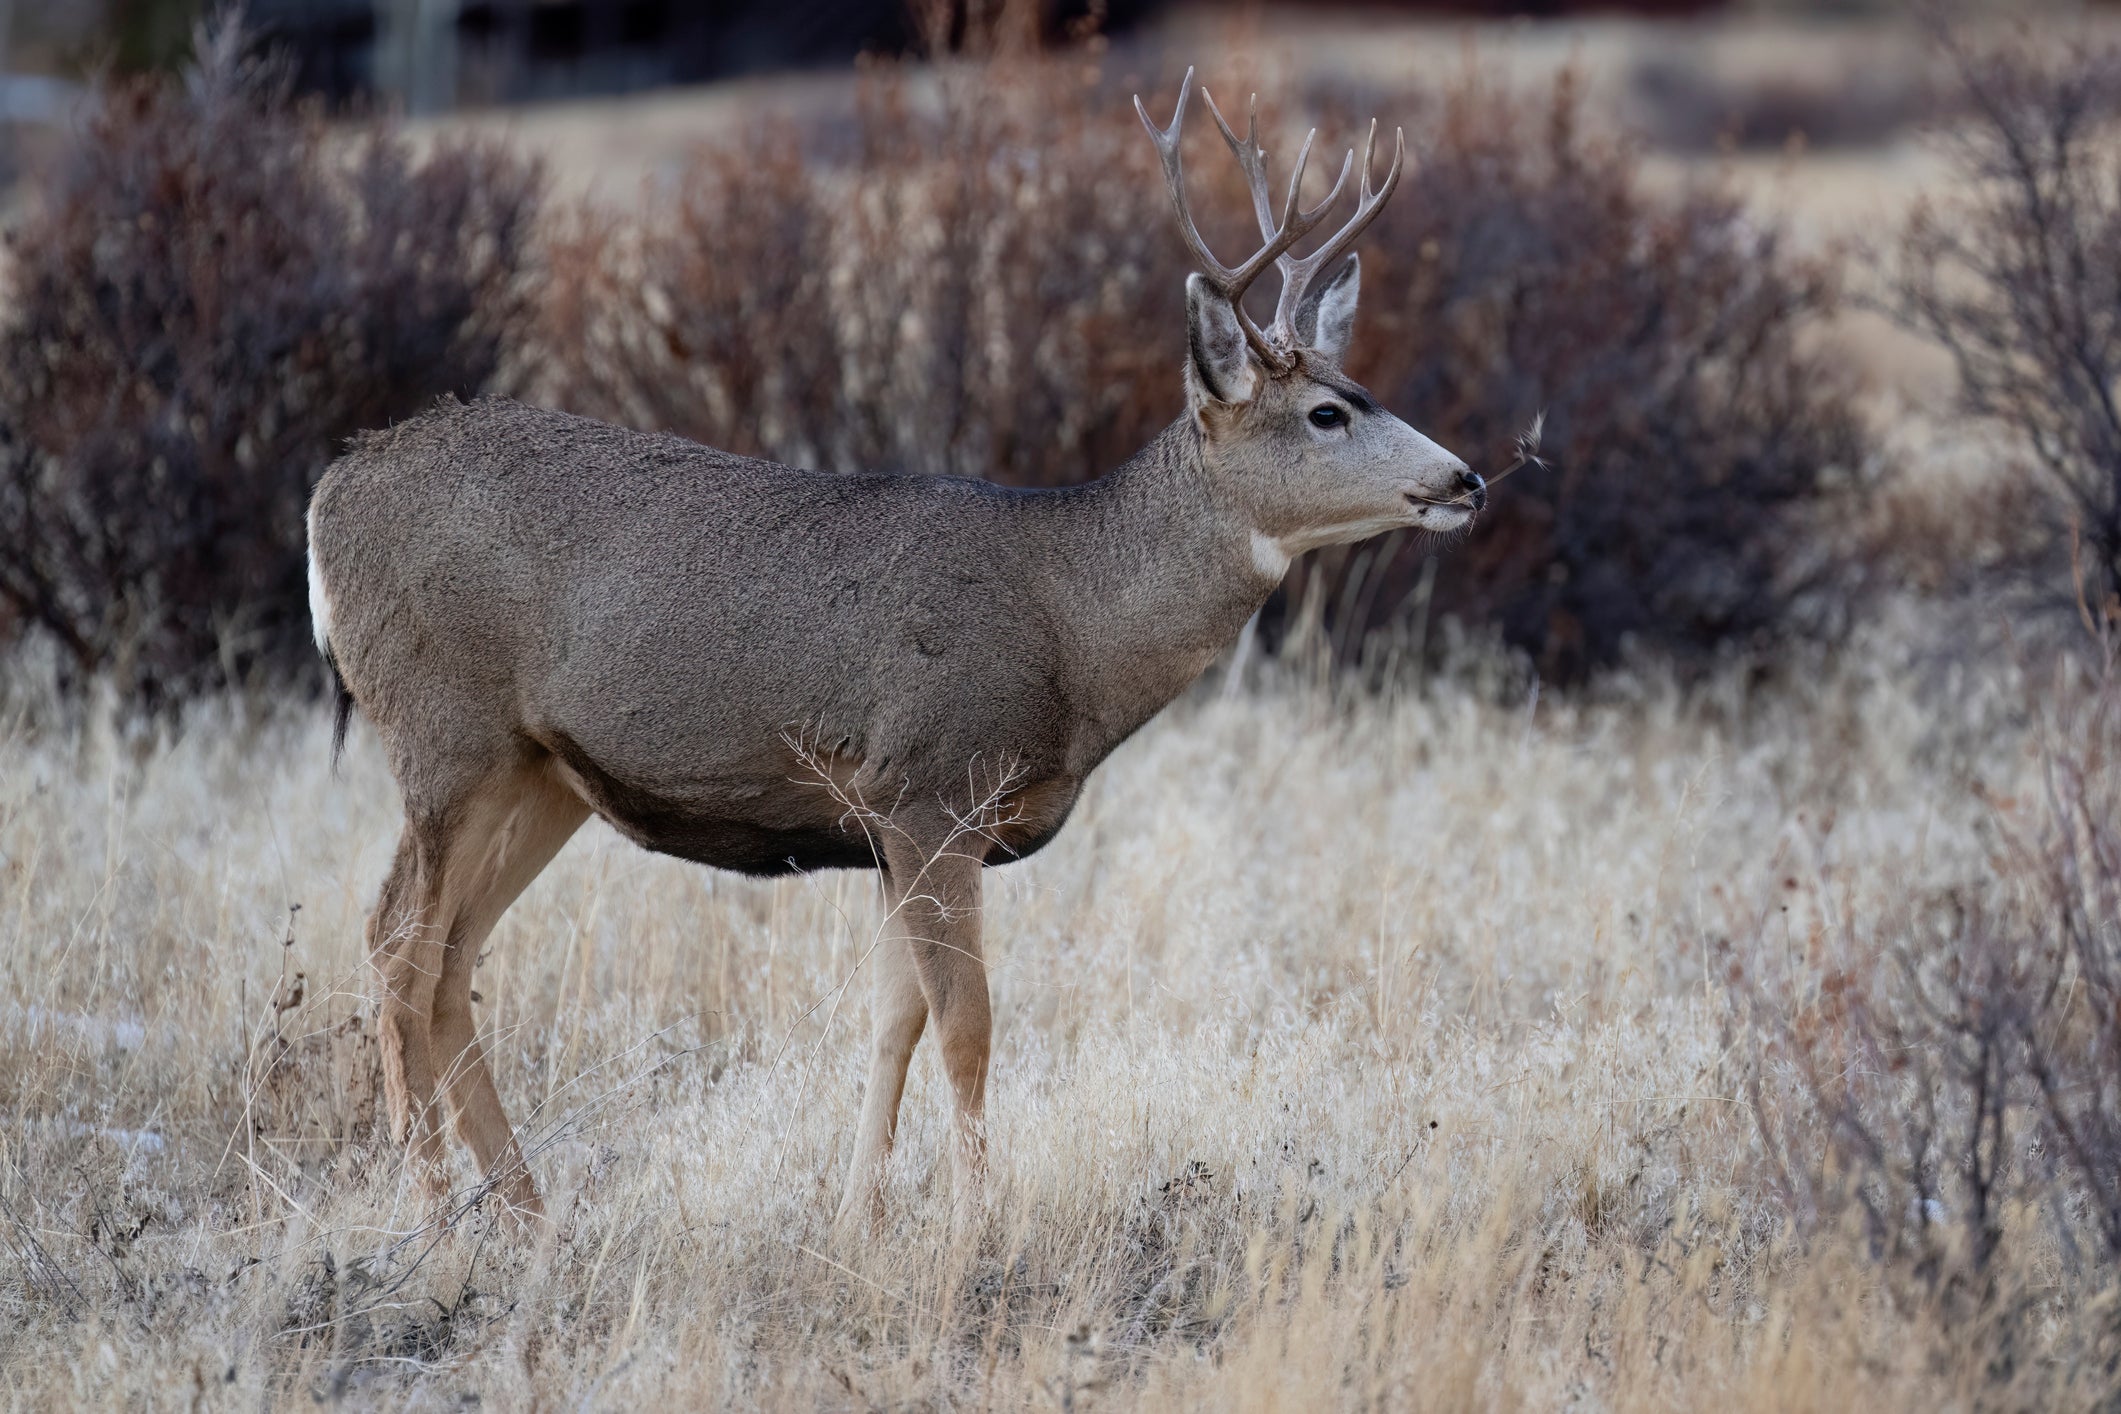 File photo of a Mule deer in Colorado, USA. Up to 800 samples of chronic wasting disease were found in deer, elk and moose